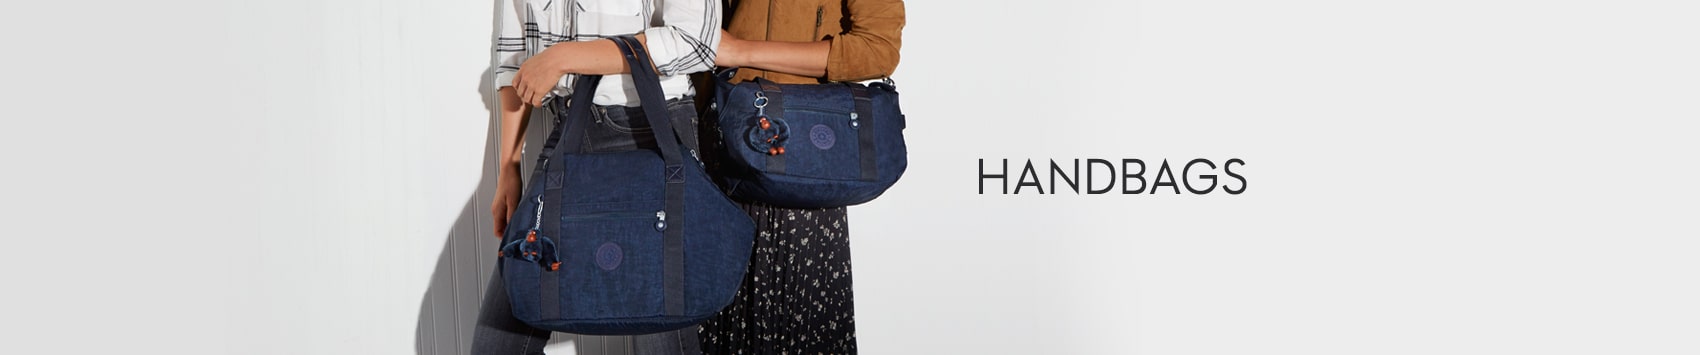 Handbags & Purses: Cute Designer Bags for Women | Kipling